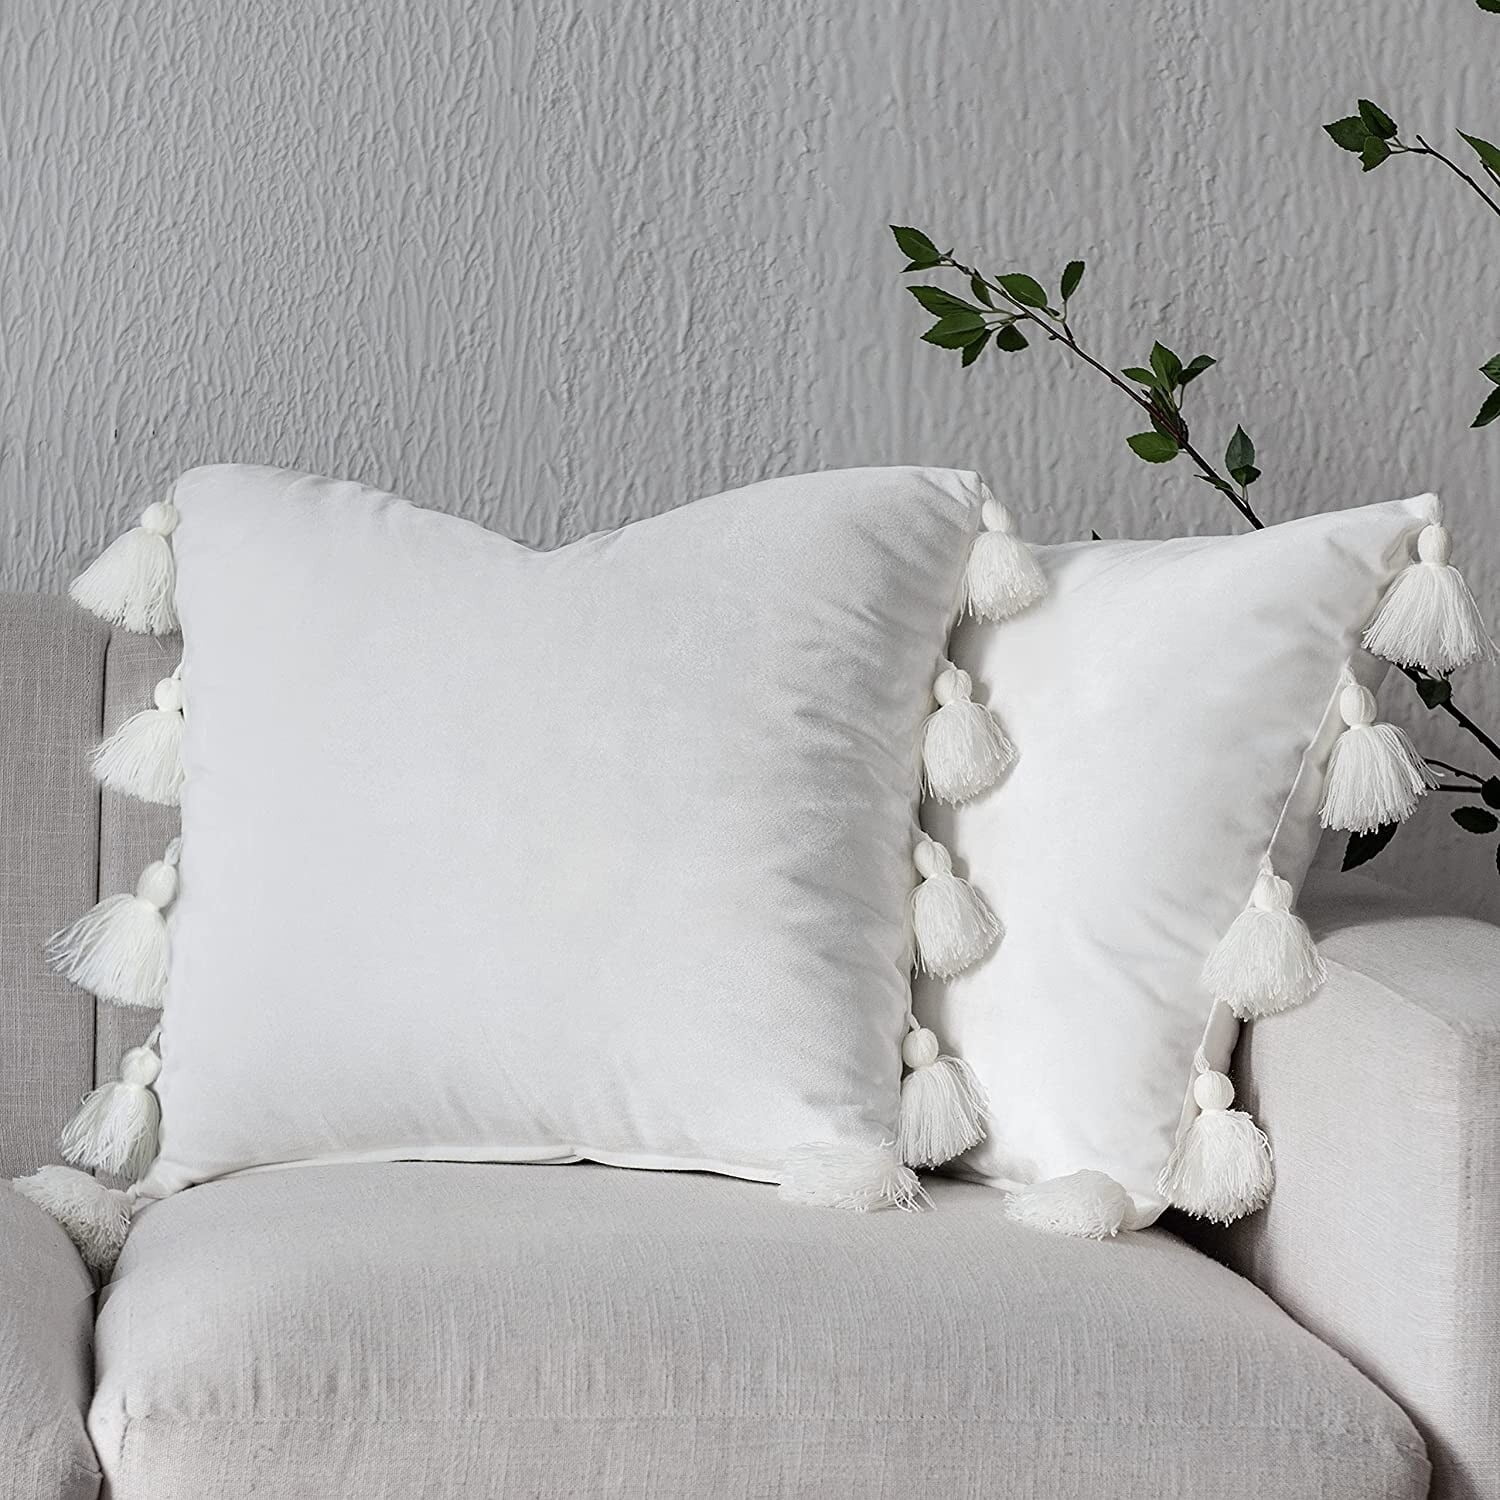 Alysheer Embroidered Decorative Throw Pillow Cover 18x18 inch, Classic Boho Mandala Knit Pattern, Cozy Soft 100% Cotton Canvas, Firebrick Orange